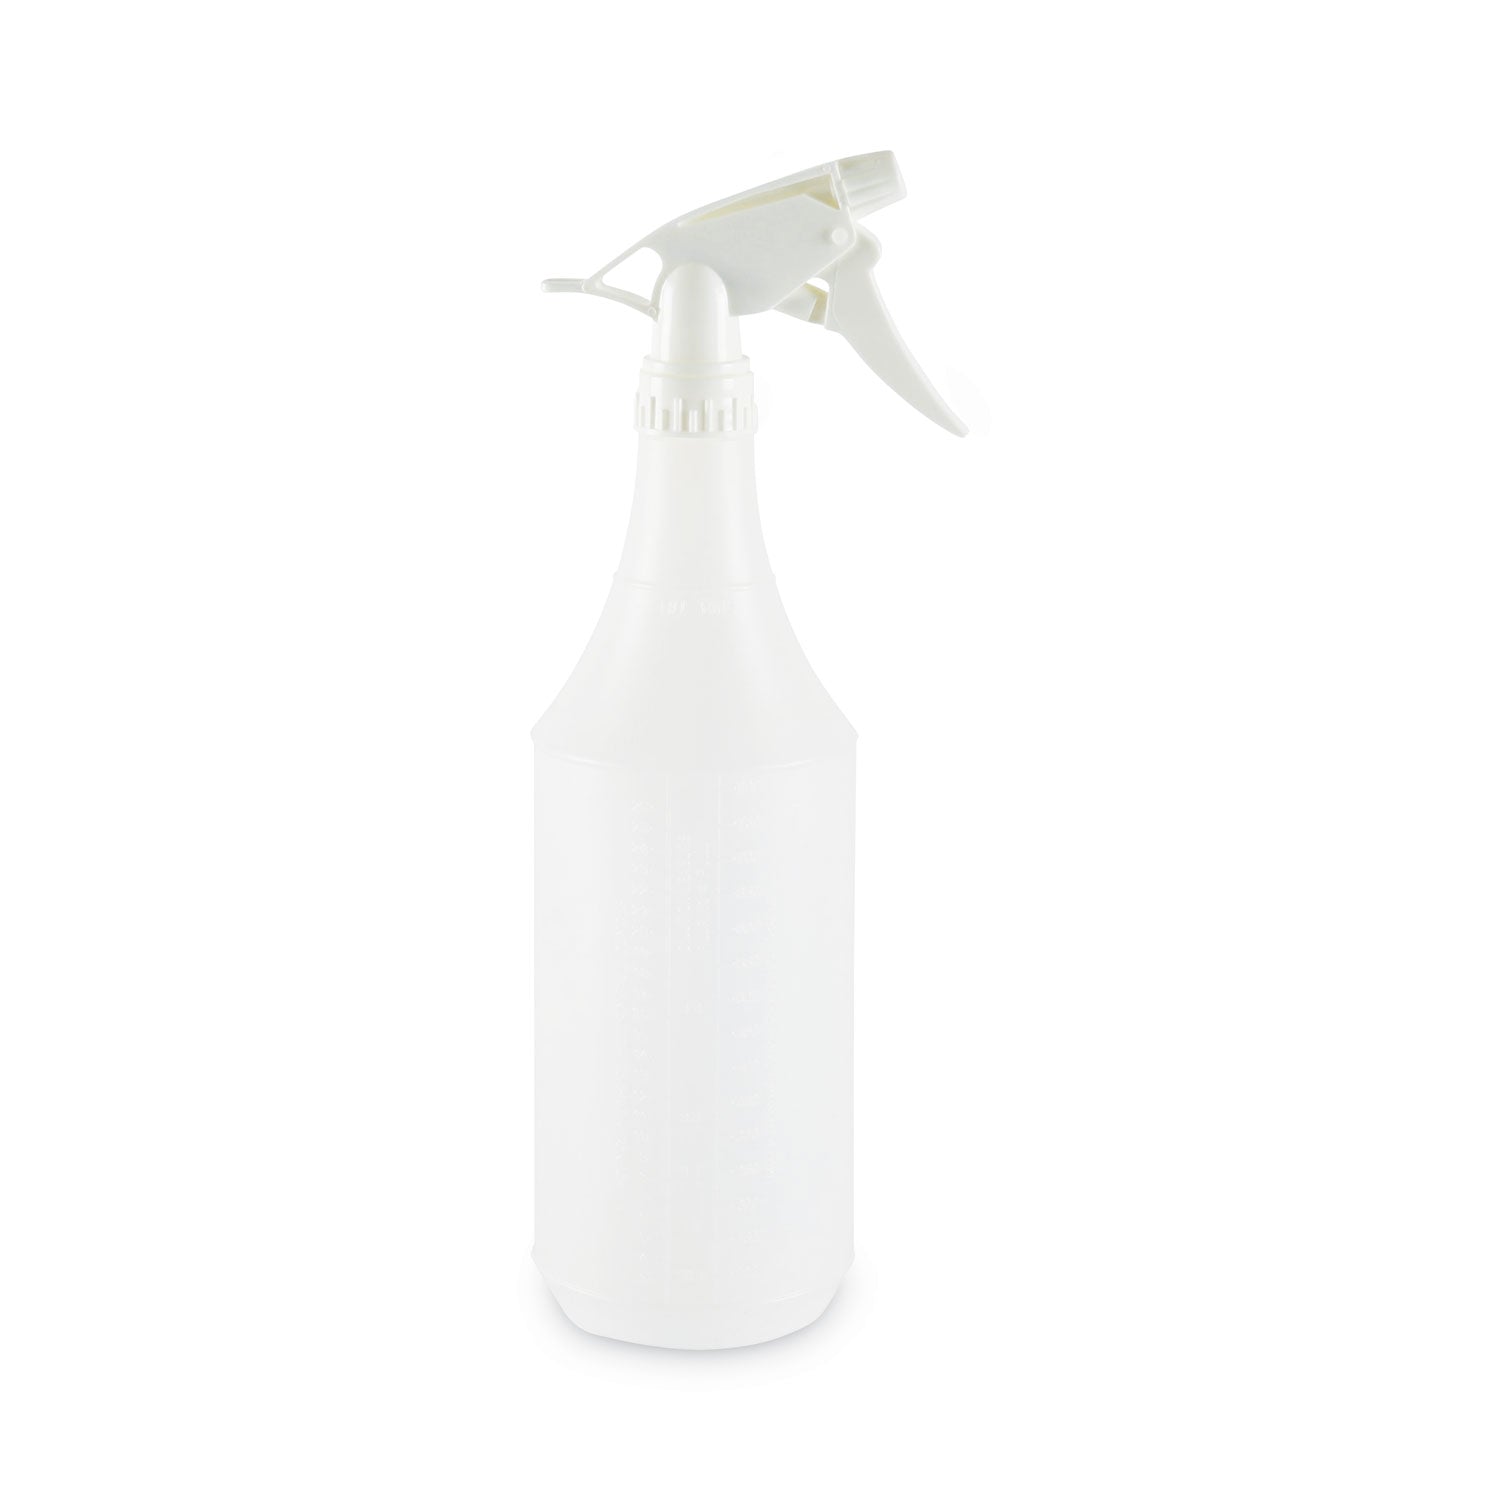 embossed-spray-bottle-32-oz-clear-24-carton_bwk00032 - 4